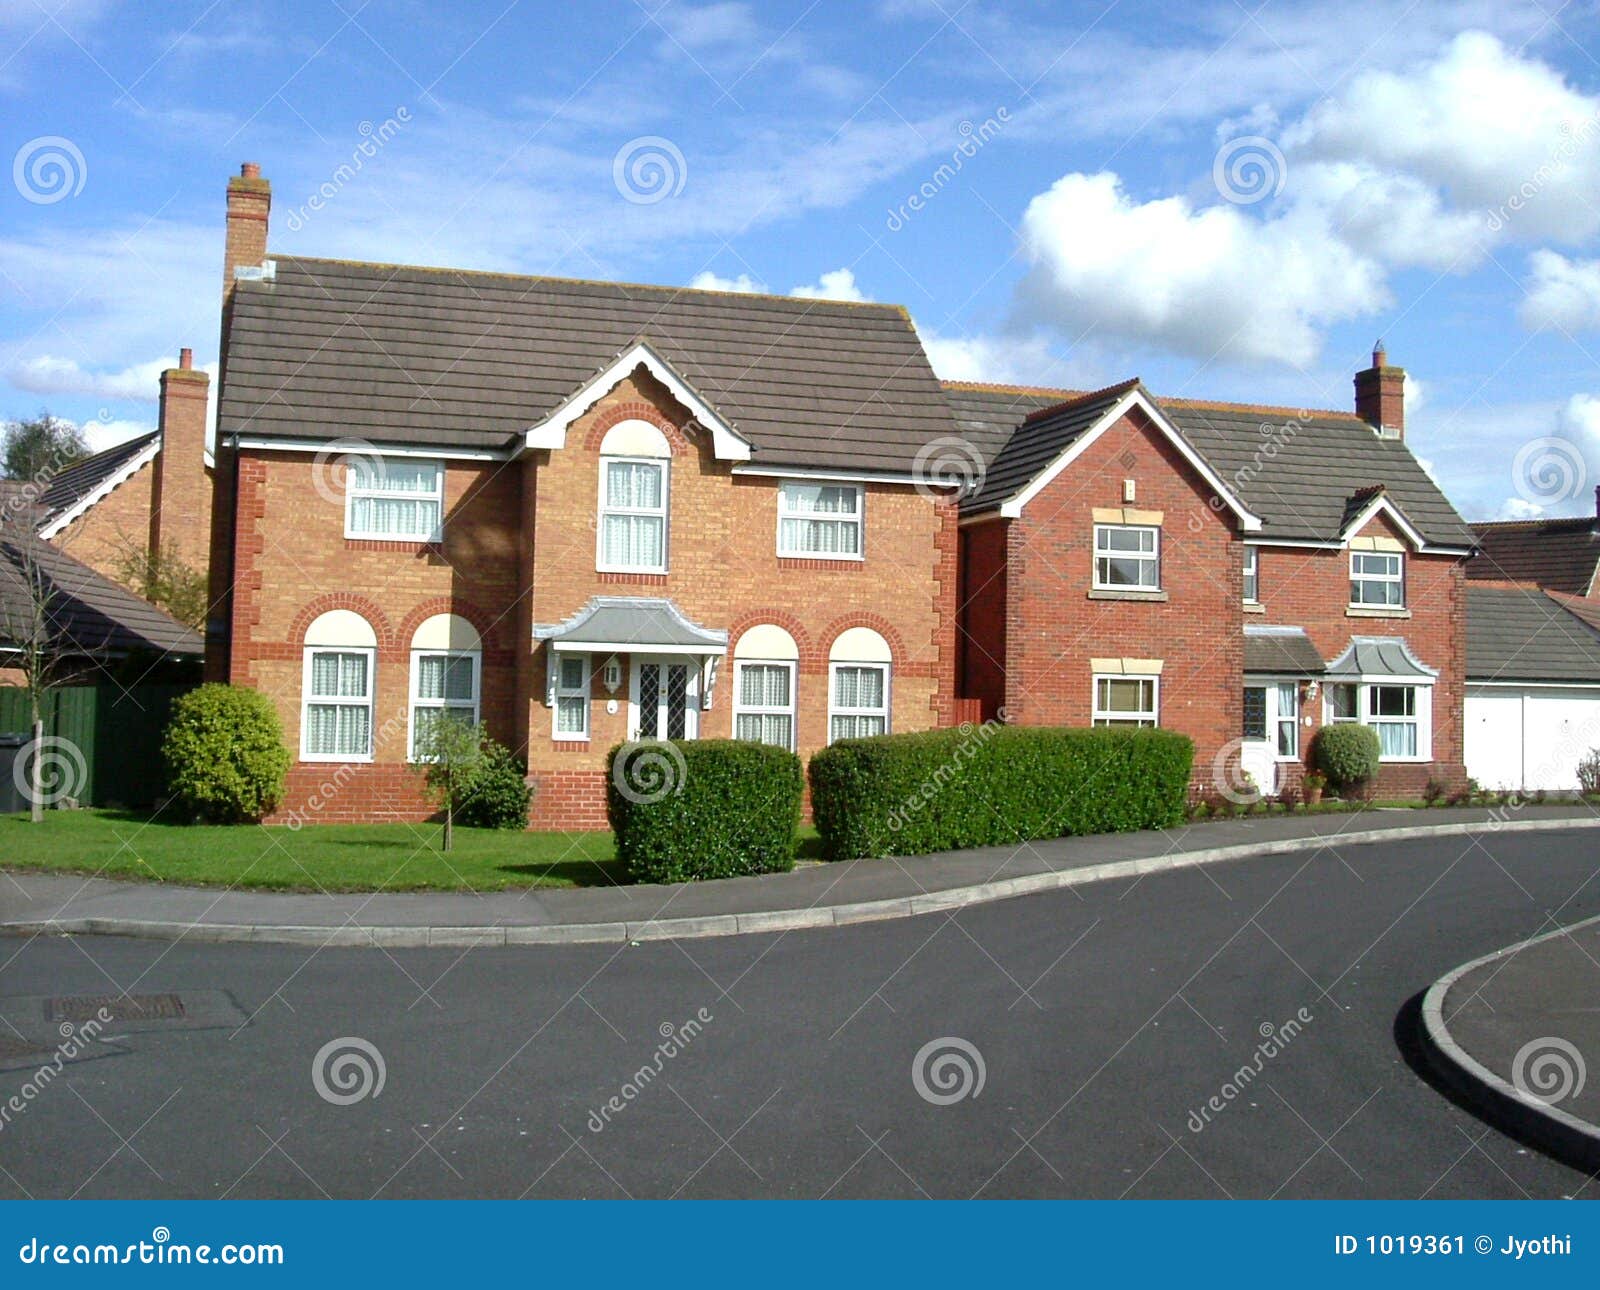 two-british-houses-1019361.jpg